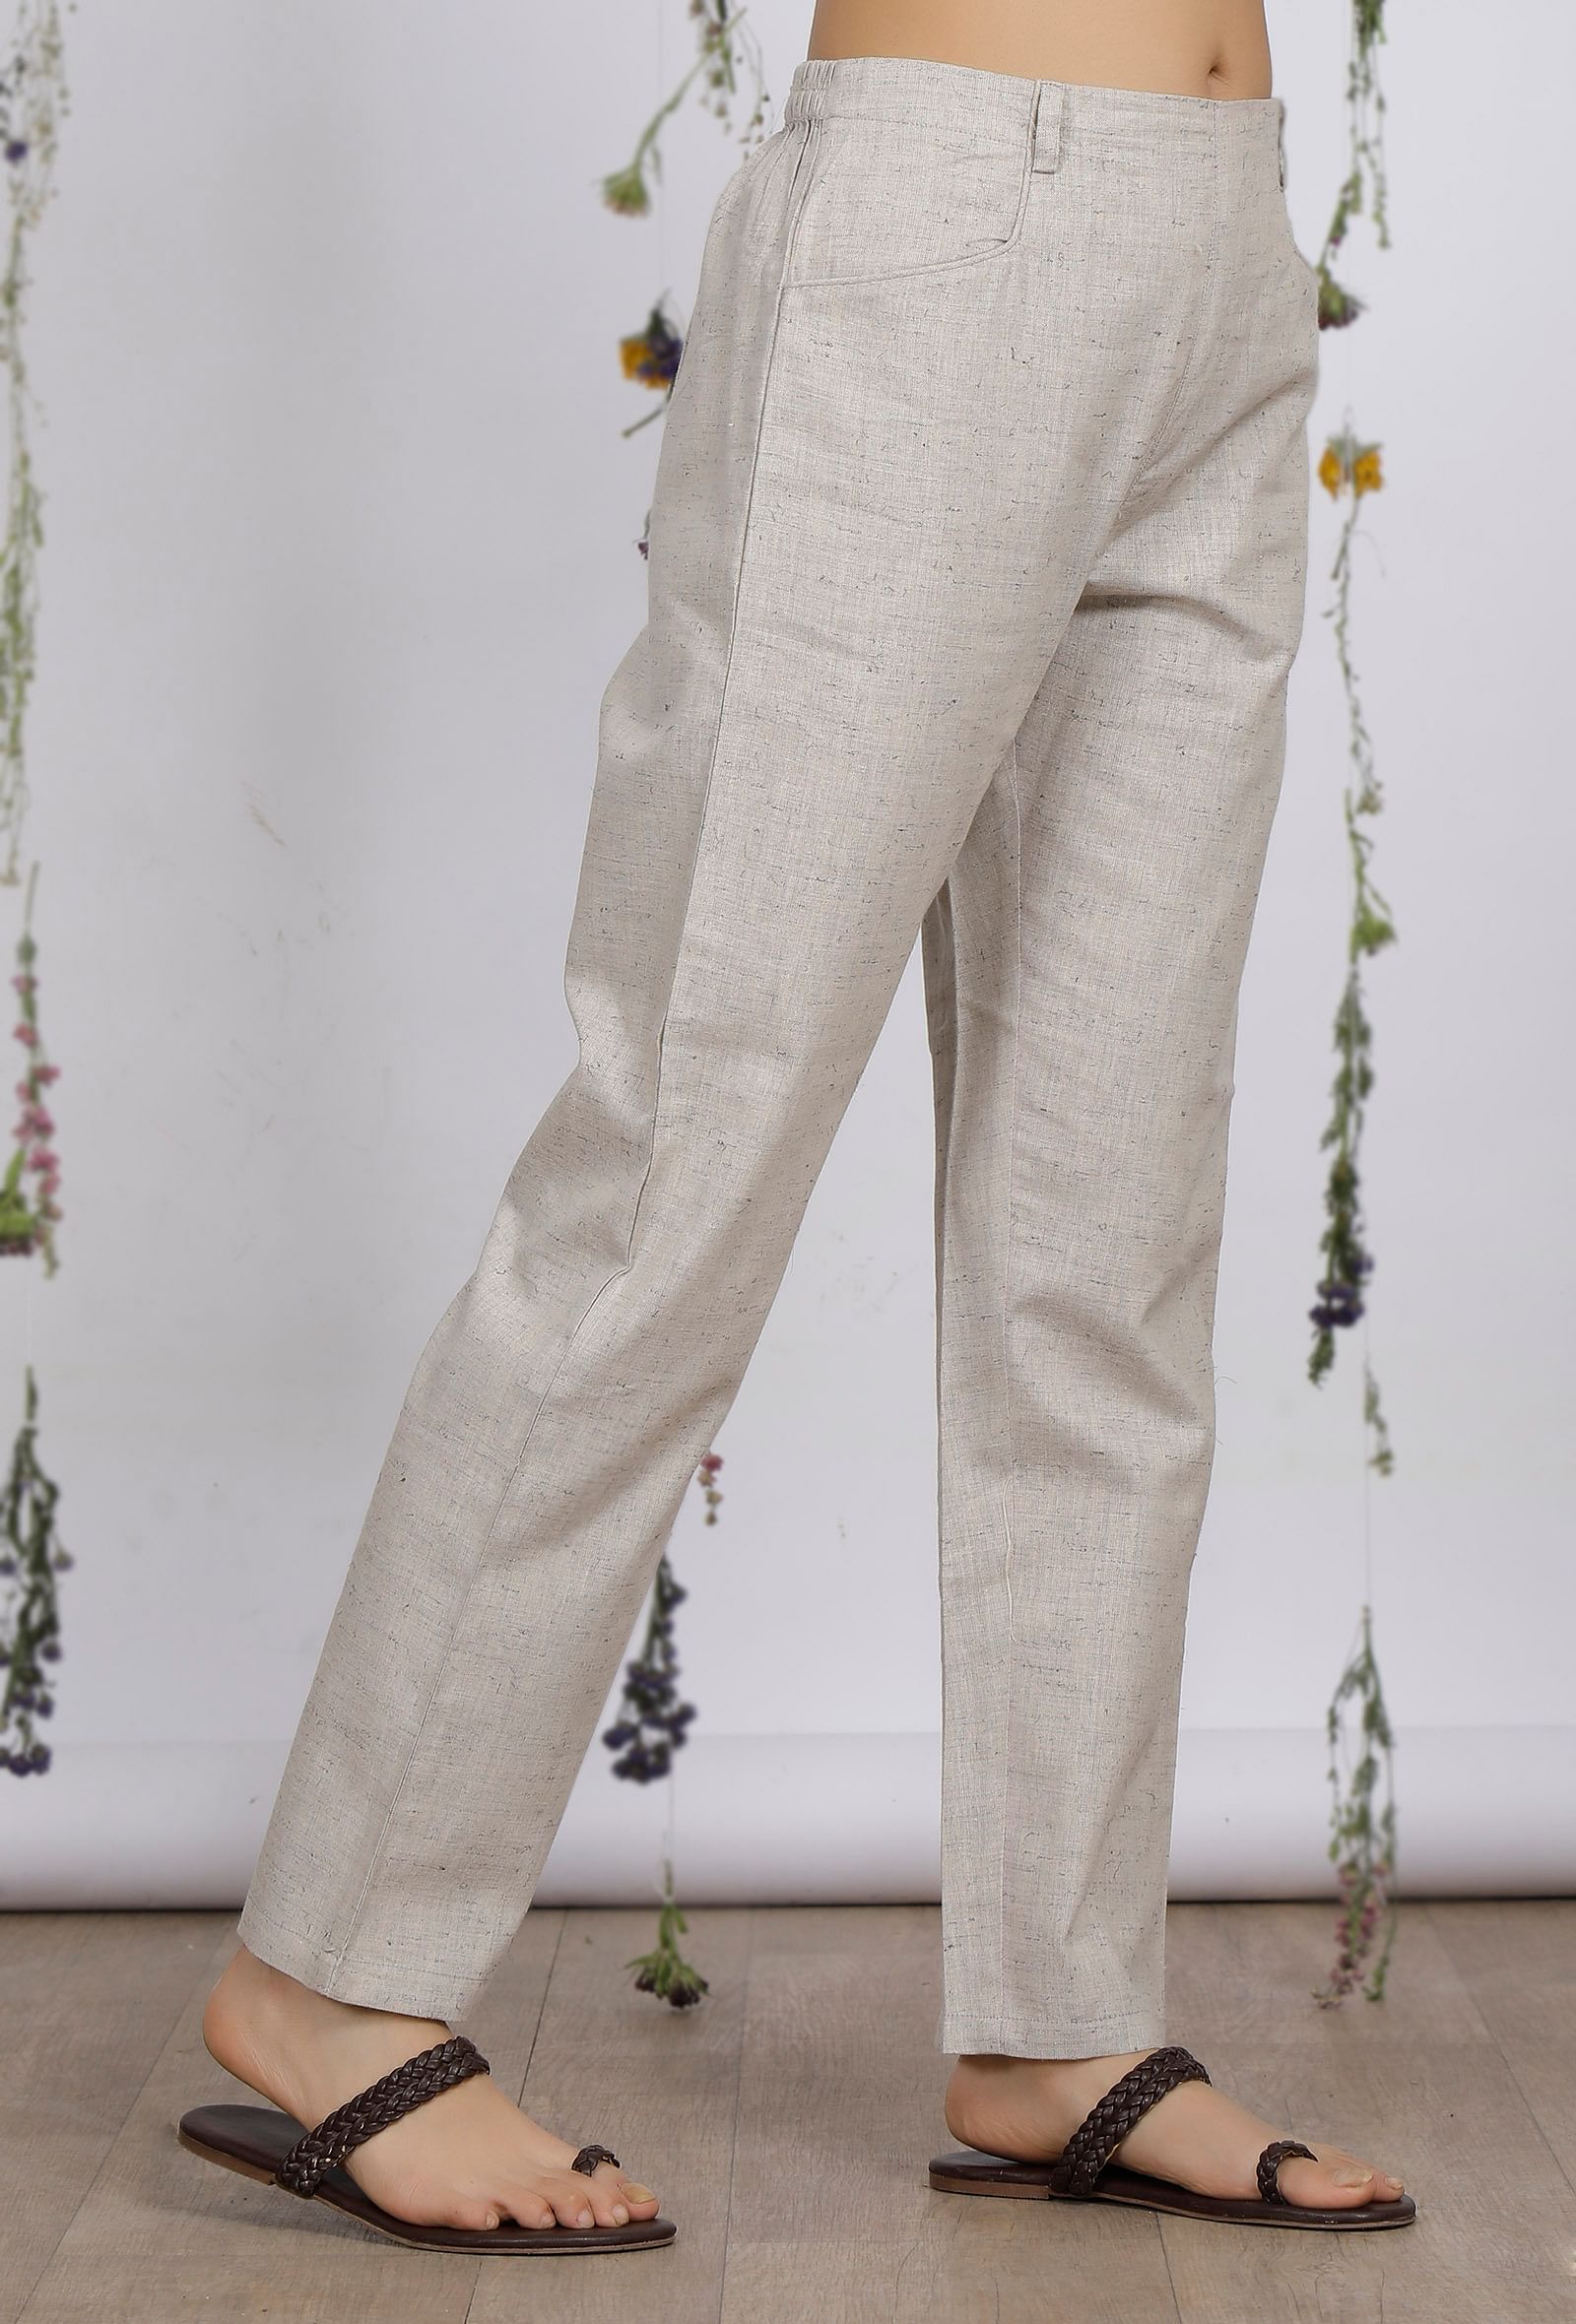 Off White Khadi Cotton Plain Fancy Trousers - Vastrang - 3009076